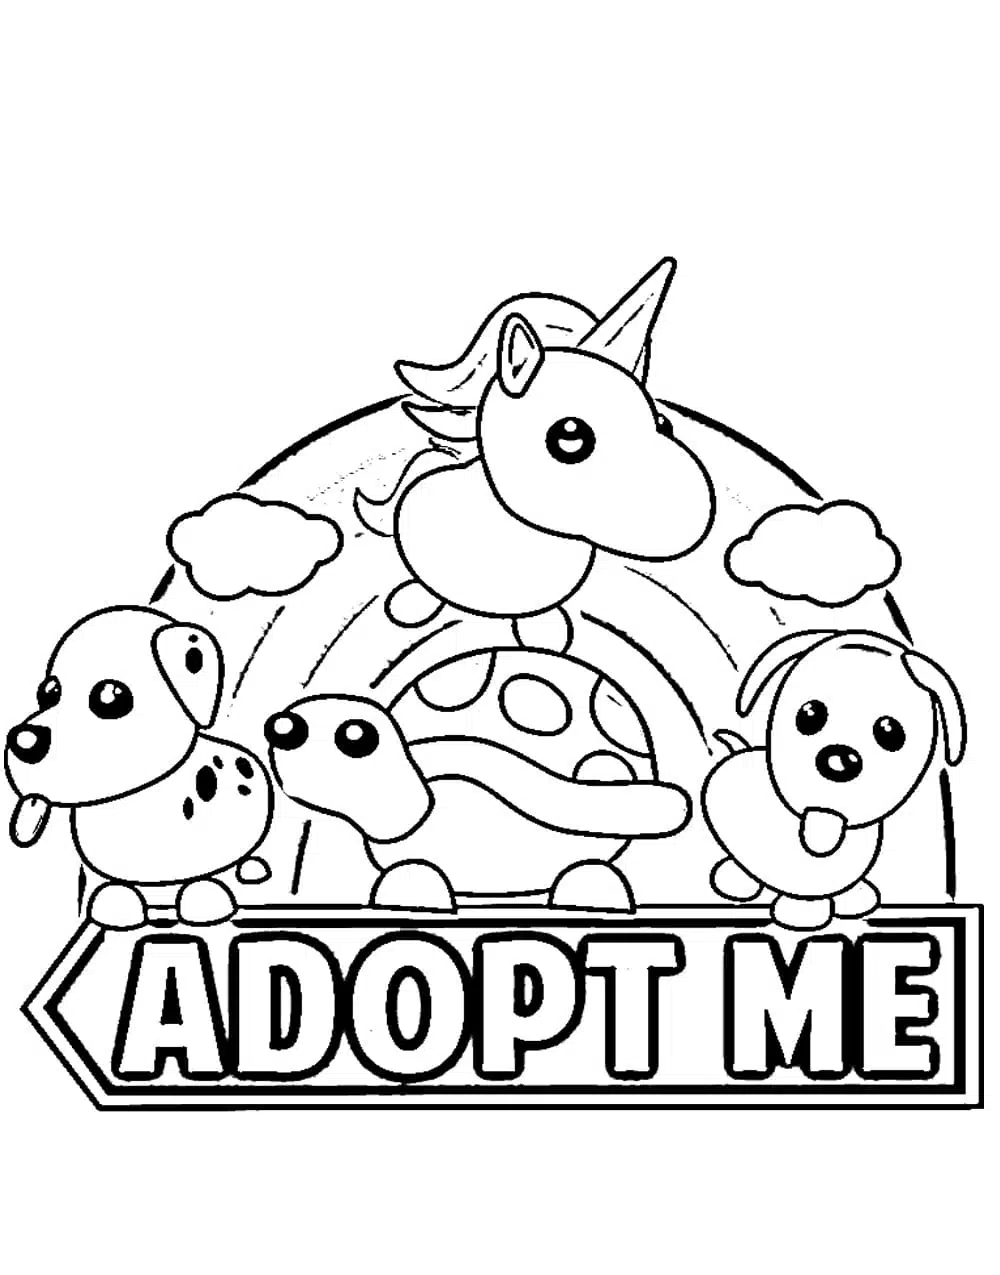 Adopt Me 02